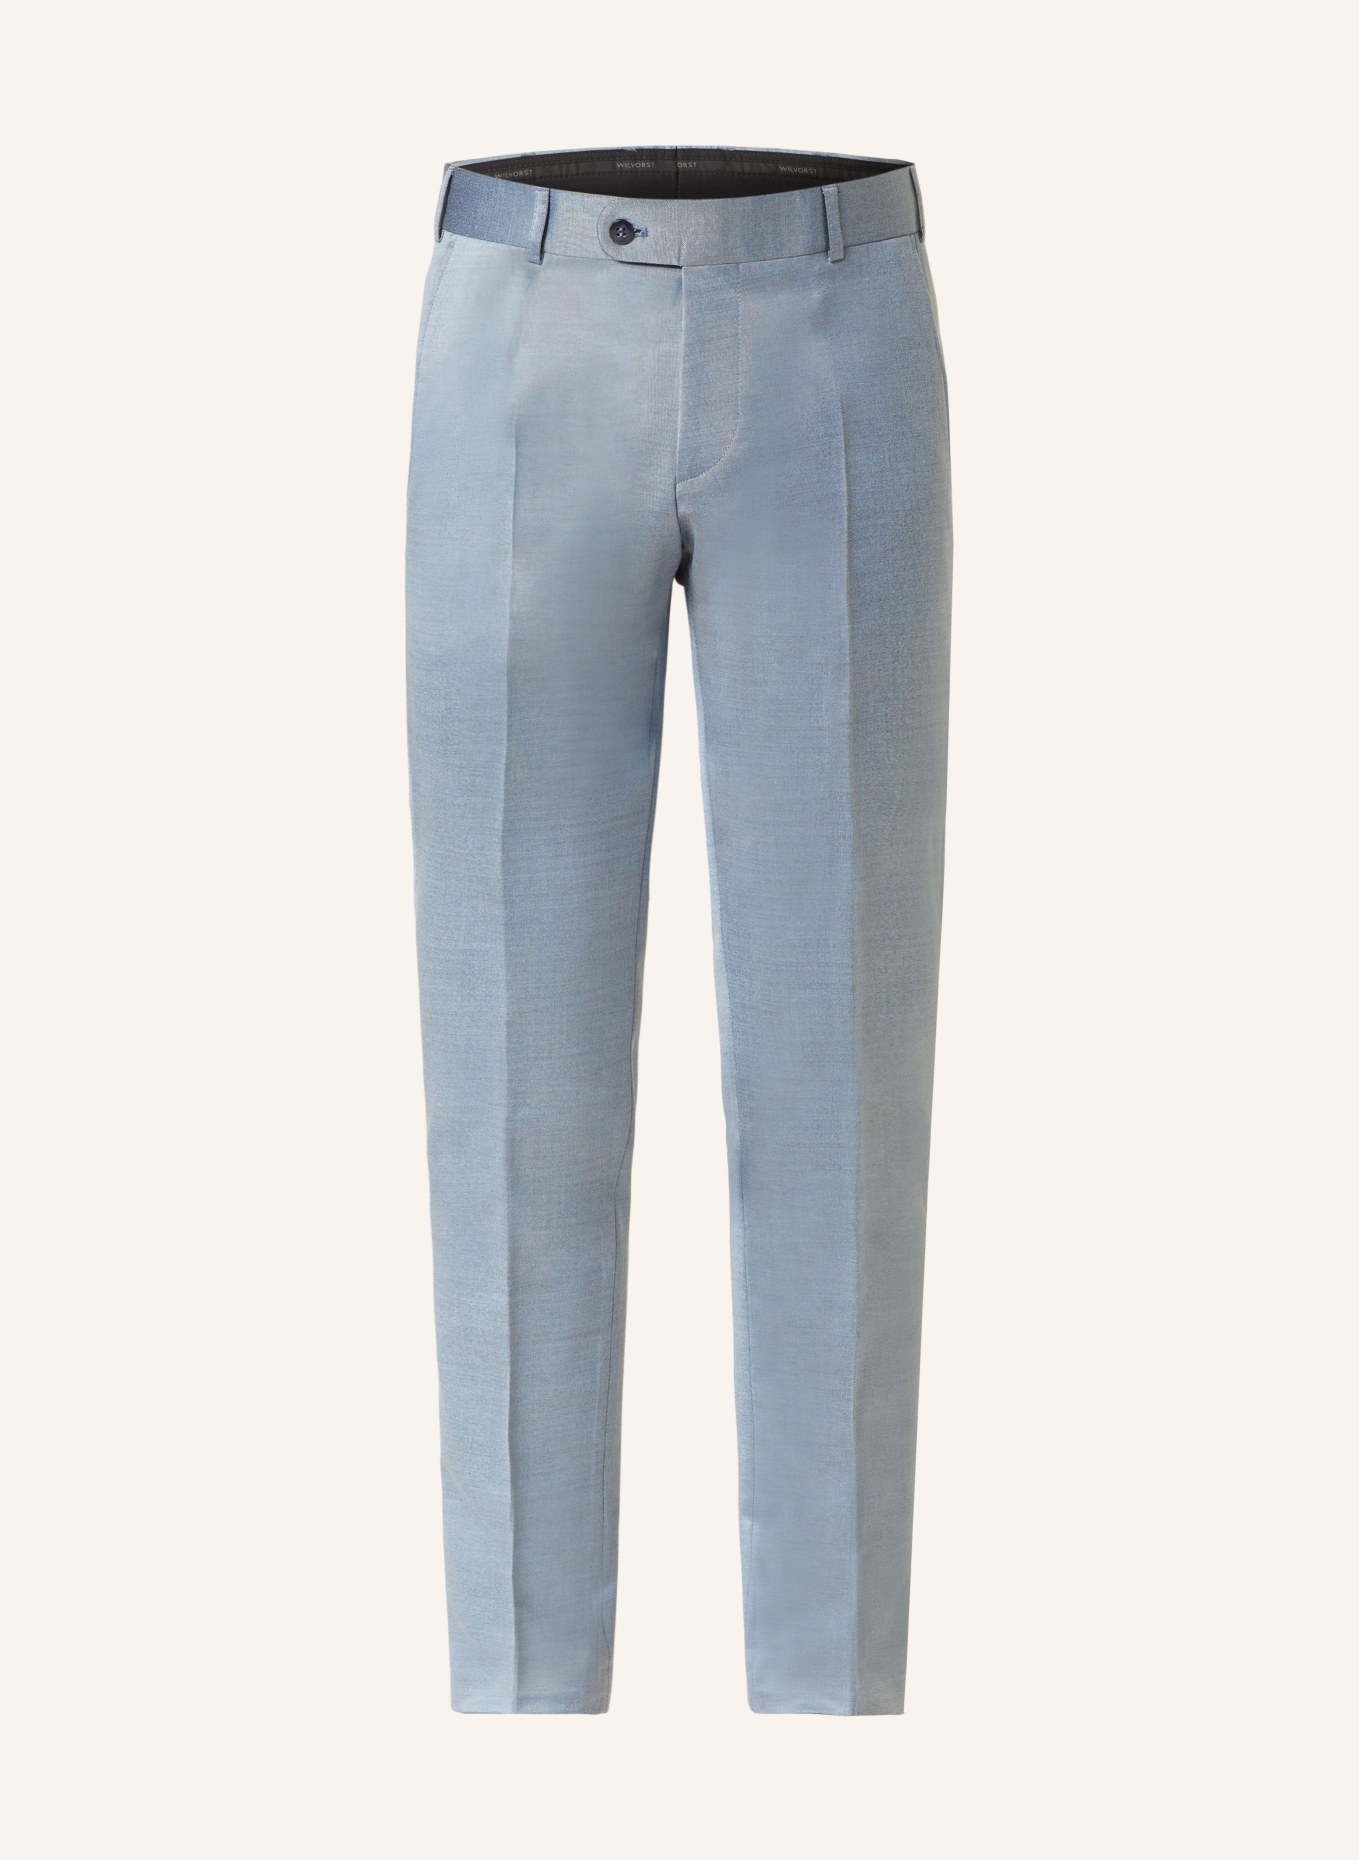 WILVORST Anzughose Slim Fit, Farbe: 036 hell Blau (Bild 1)